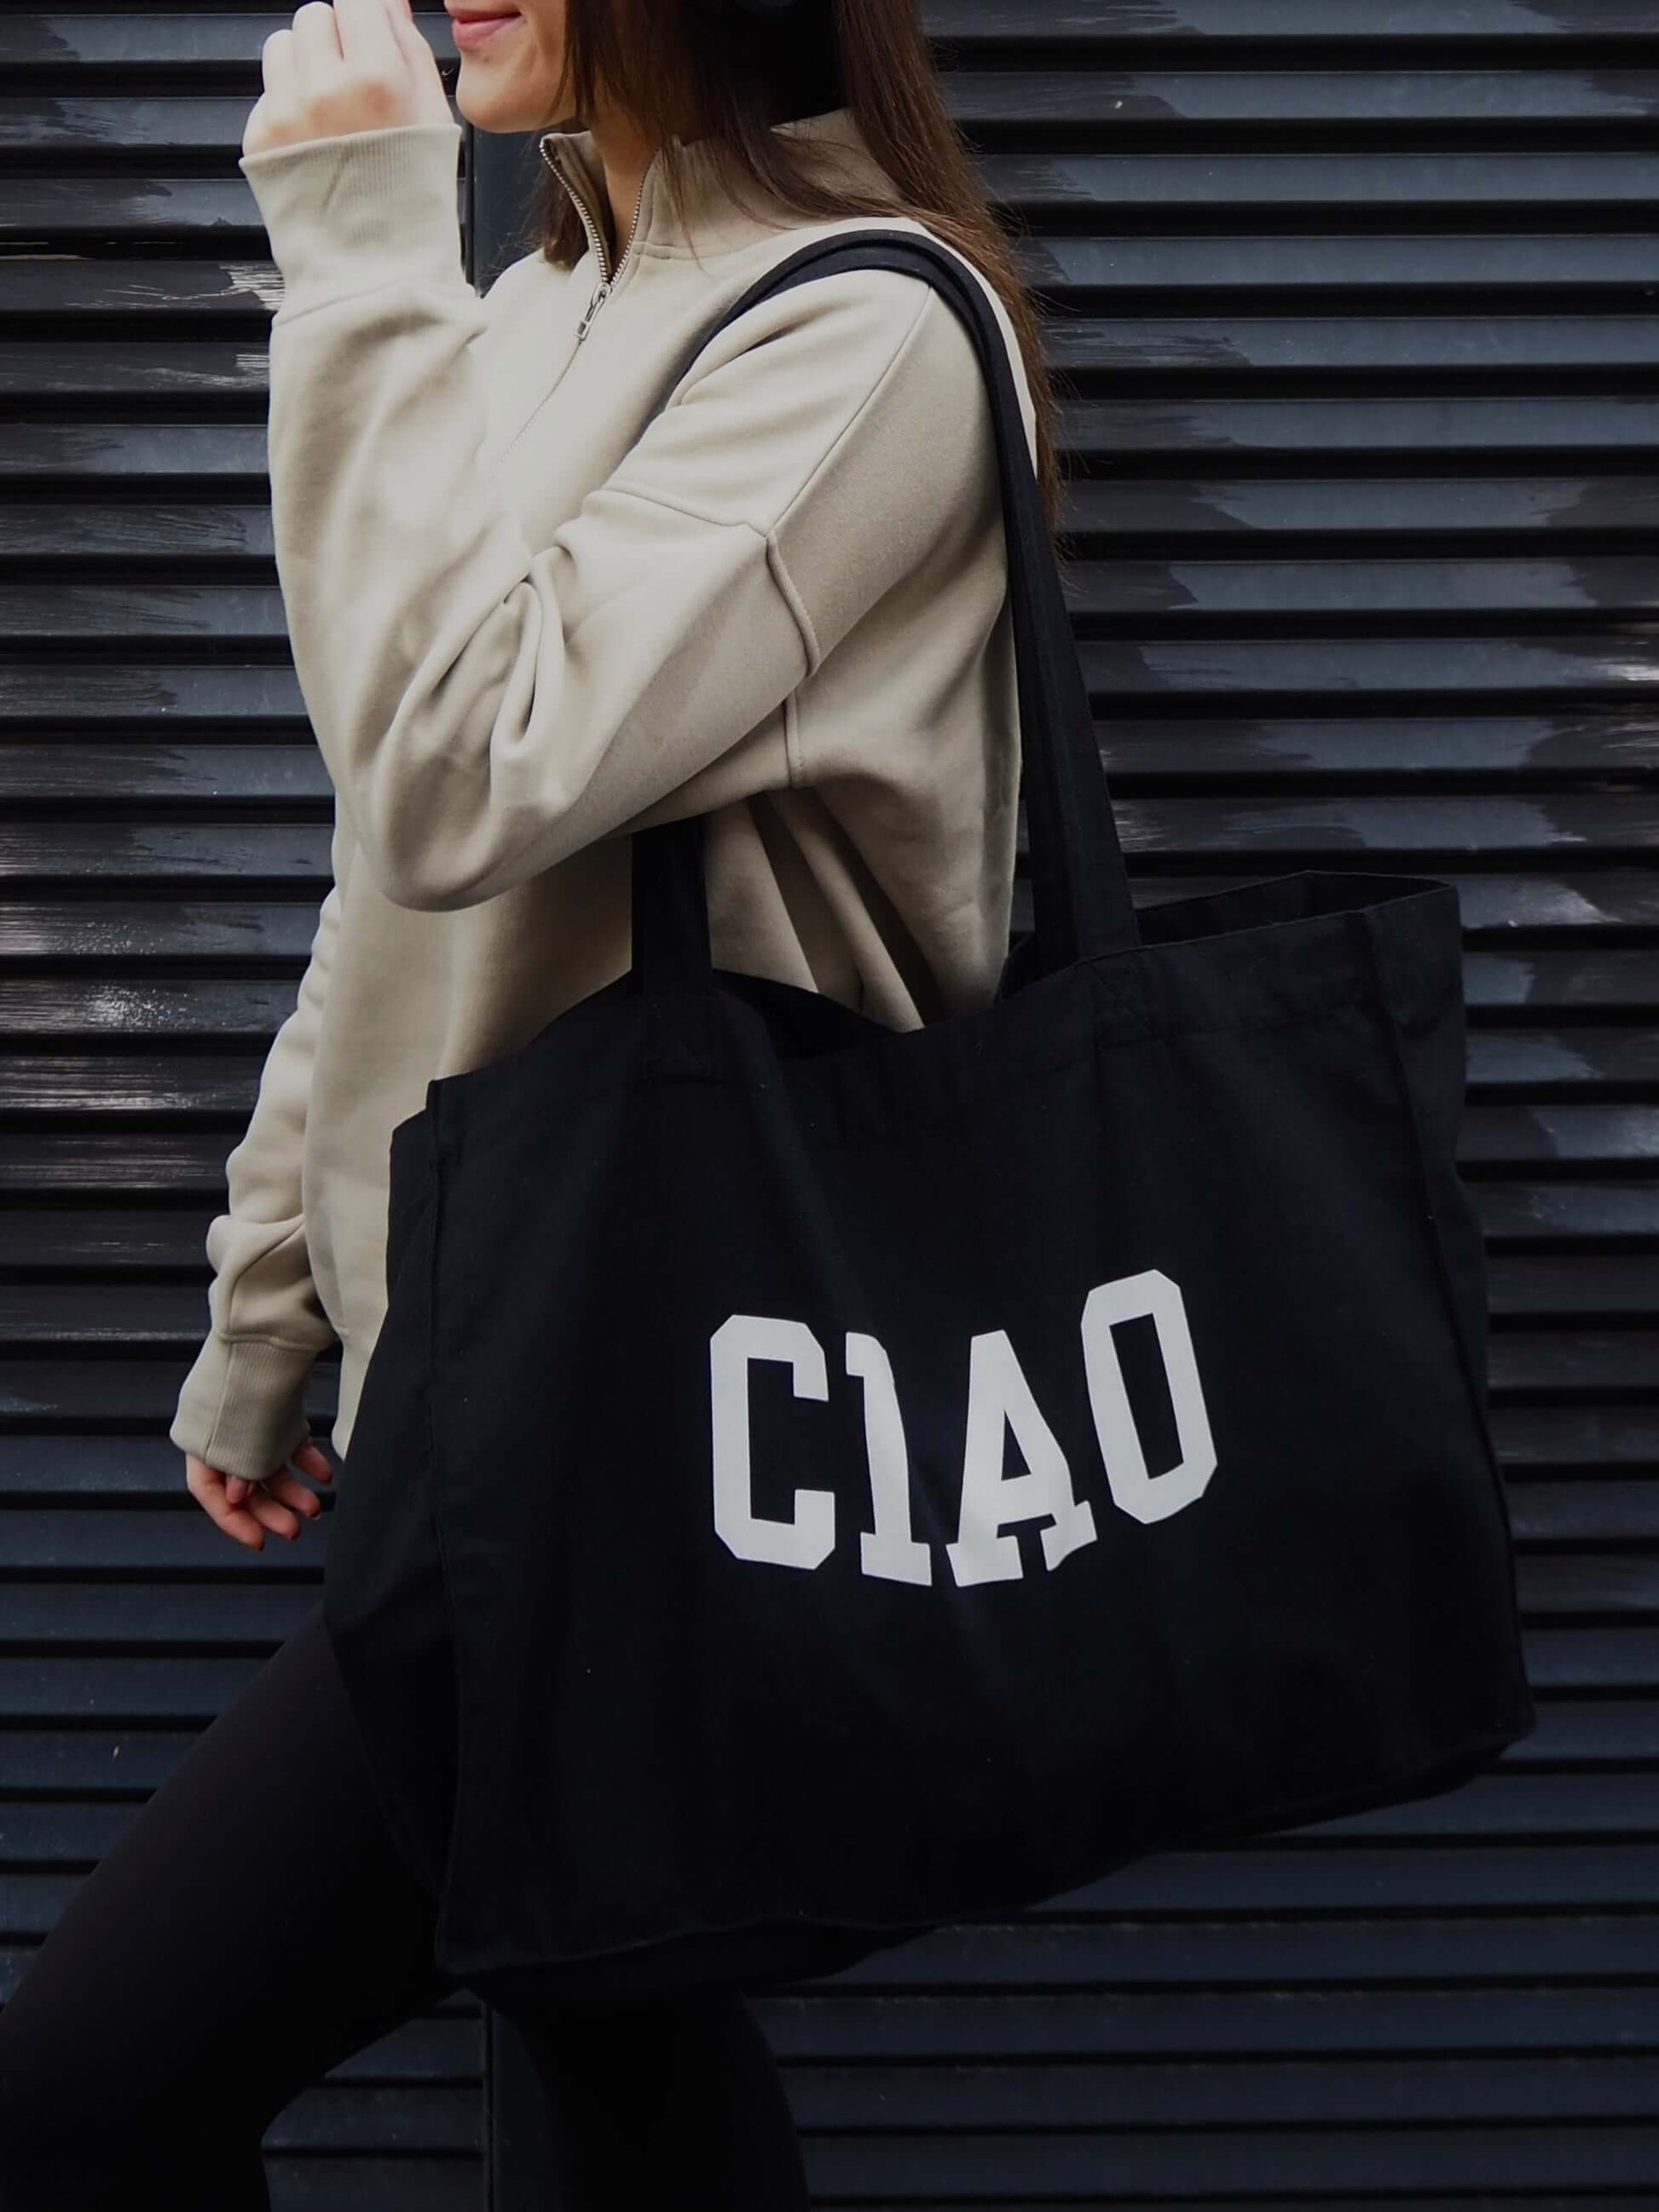 CIAO Tote Bag - Ciancio Collective